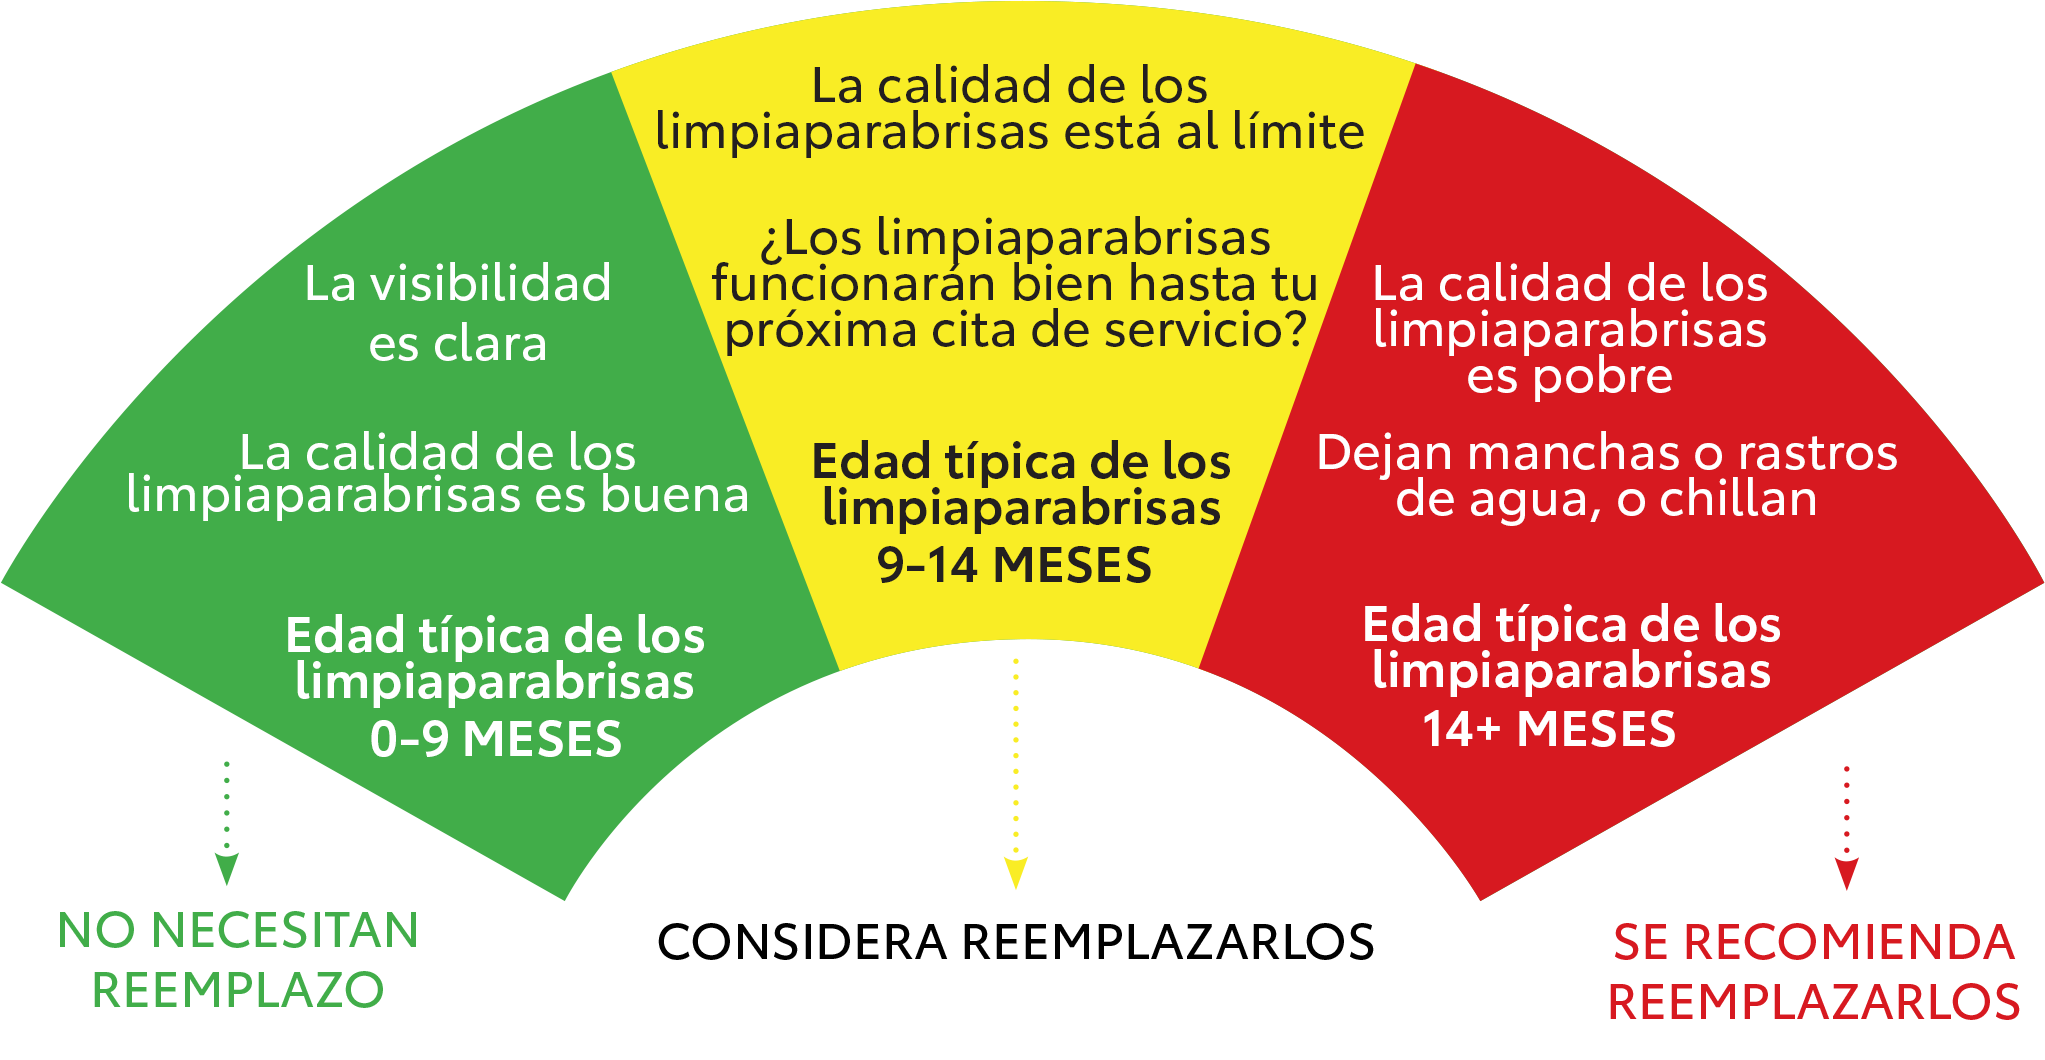 Toyota Parts Wiper Blades graphic in Spanish